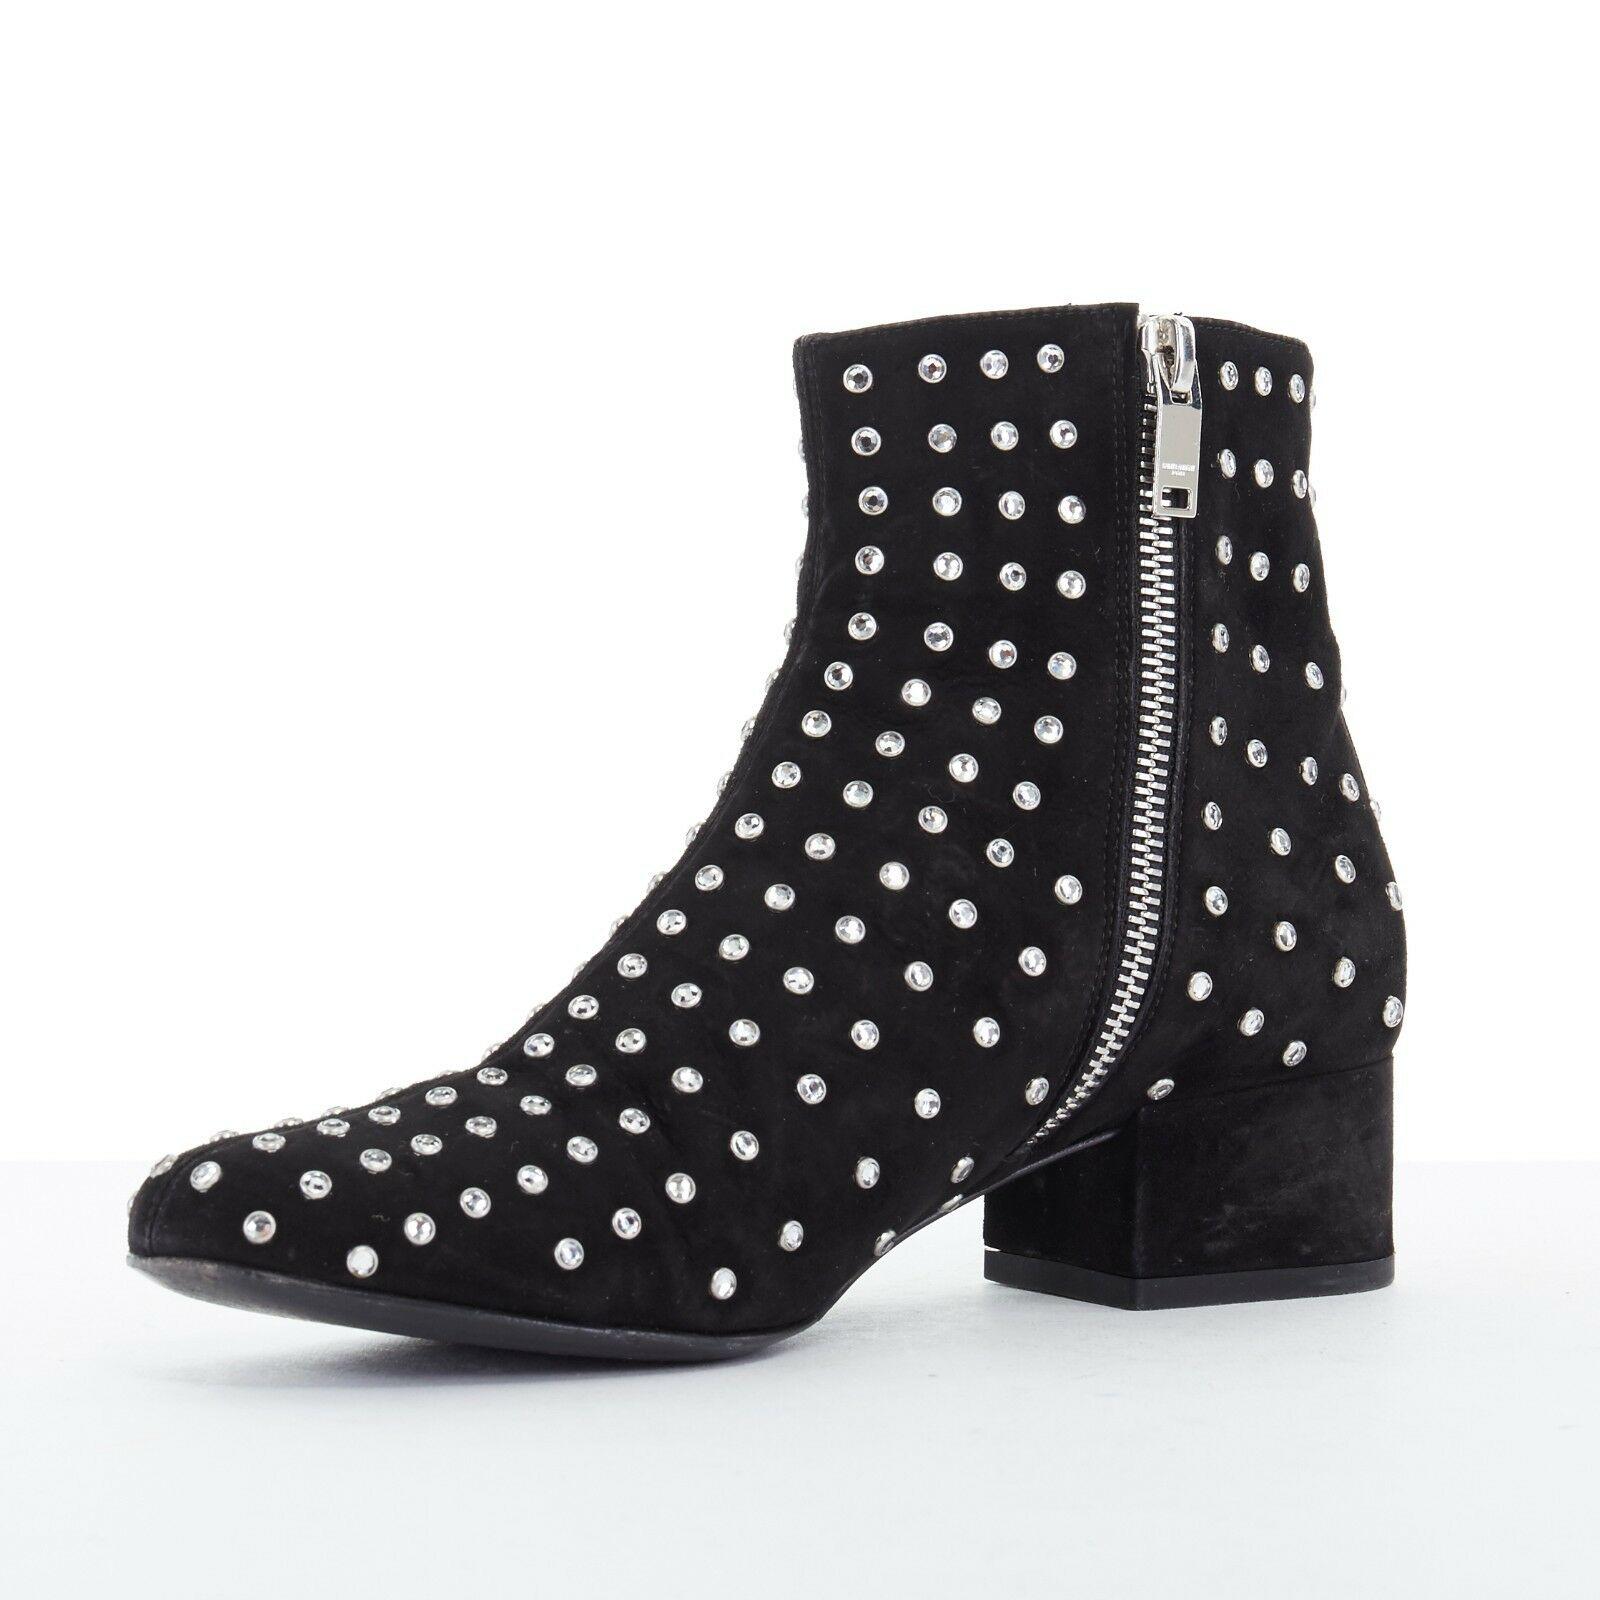 Women's SAINT LAURENT PARIS black suede strass crystal embellished ankle boot shoe EU35 For Sale